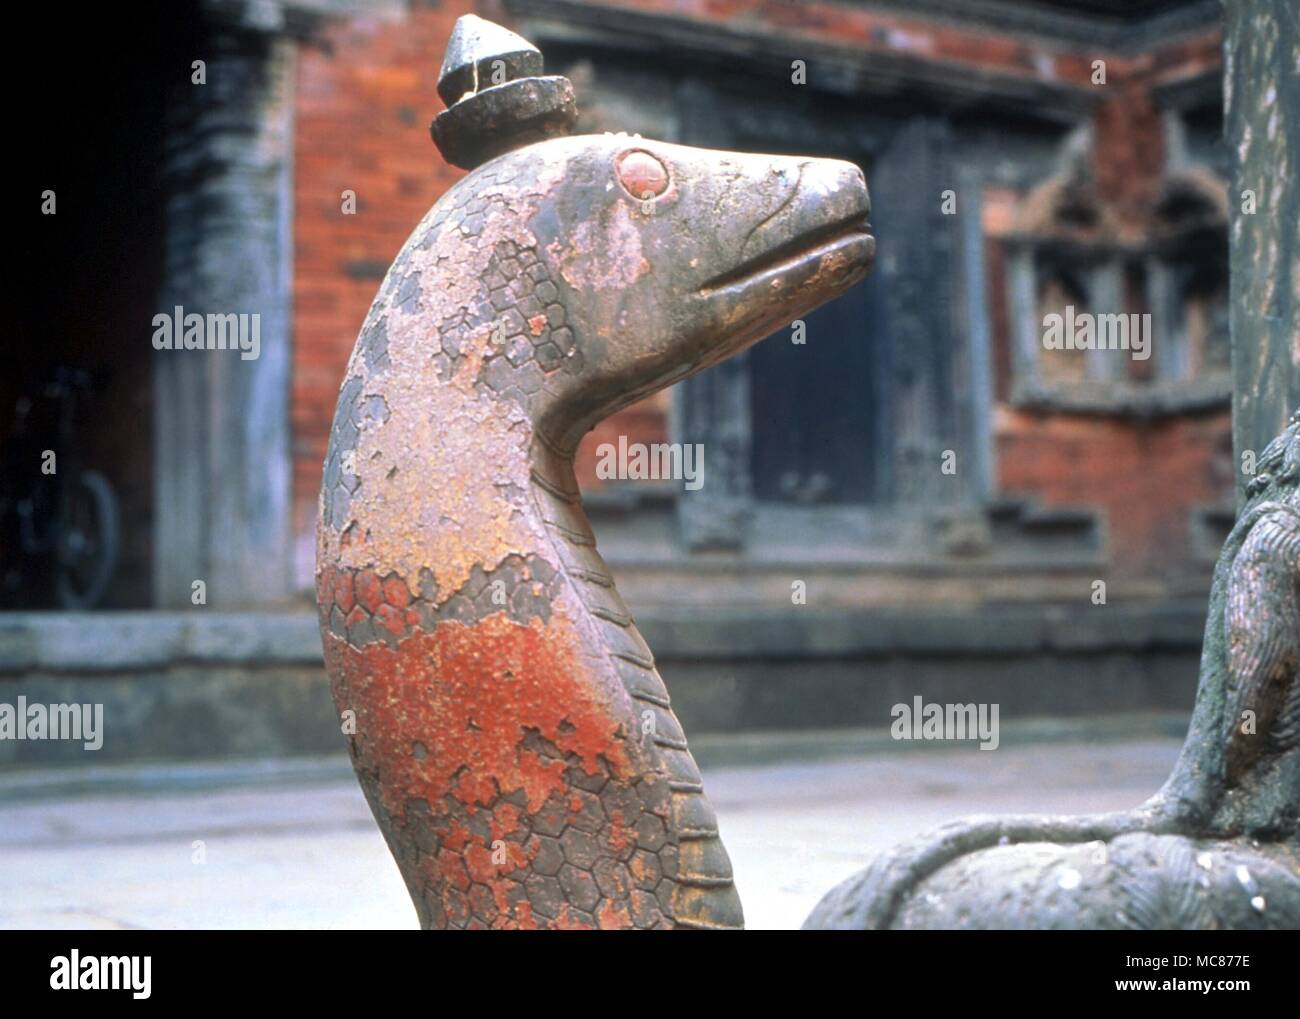 Rearing snake (naga) around the Buddhist well, or royal bath (dated circa 1670) in the Tusa Hiti, Patan, Nepal Stock Photo